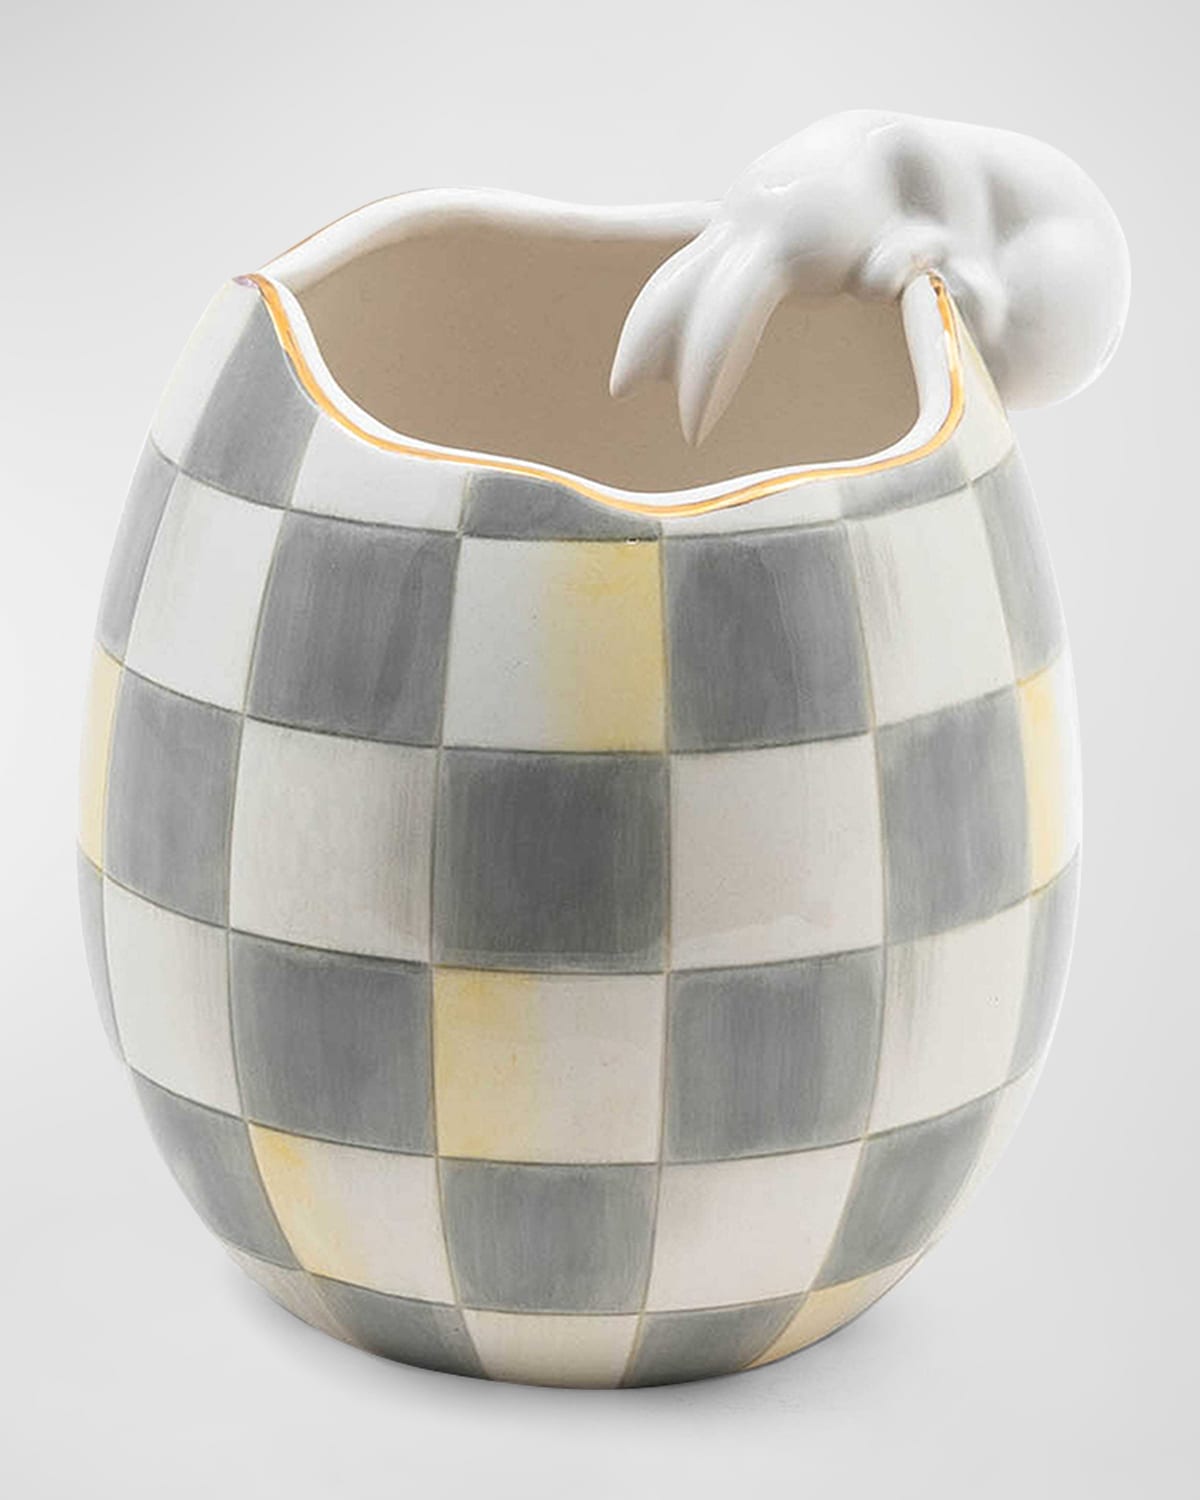 Mackenzie-childs White Rabbit Vase In Gray